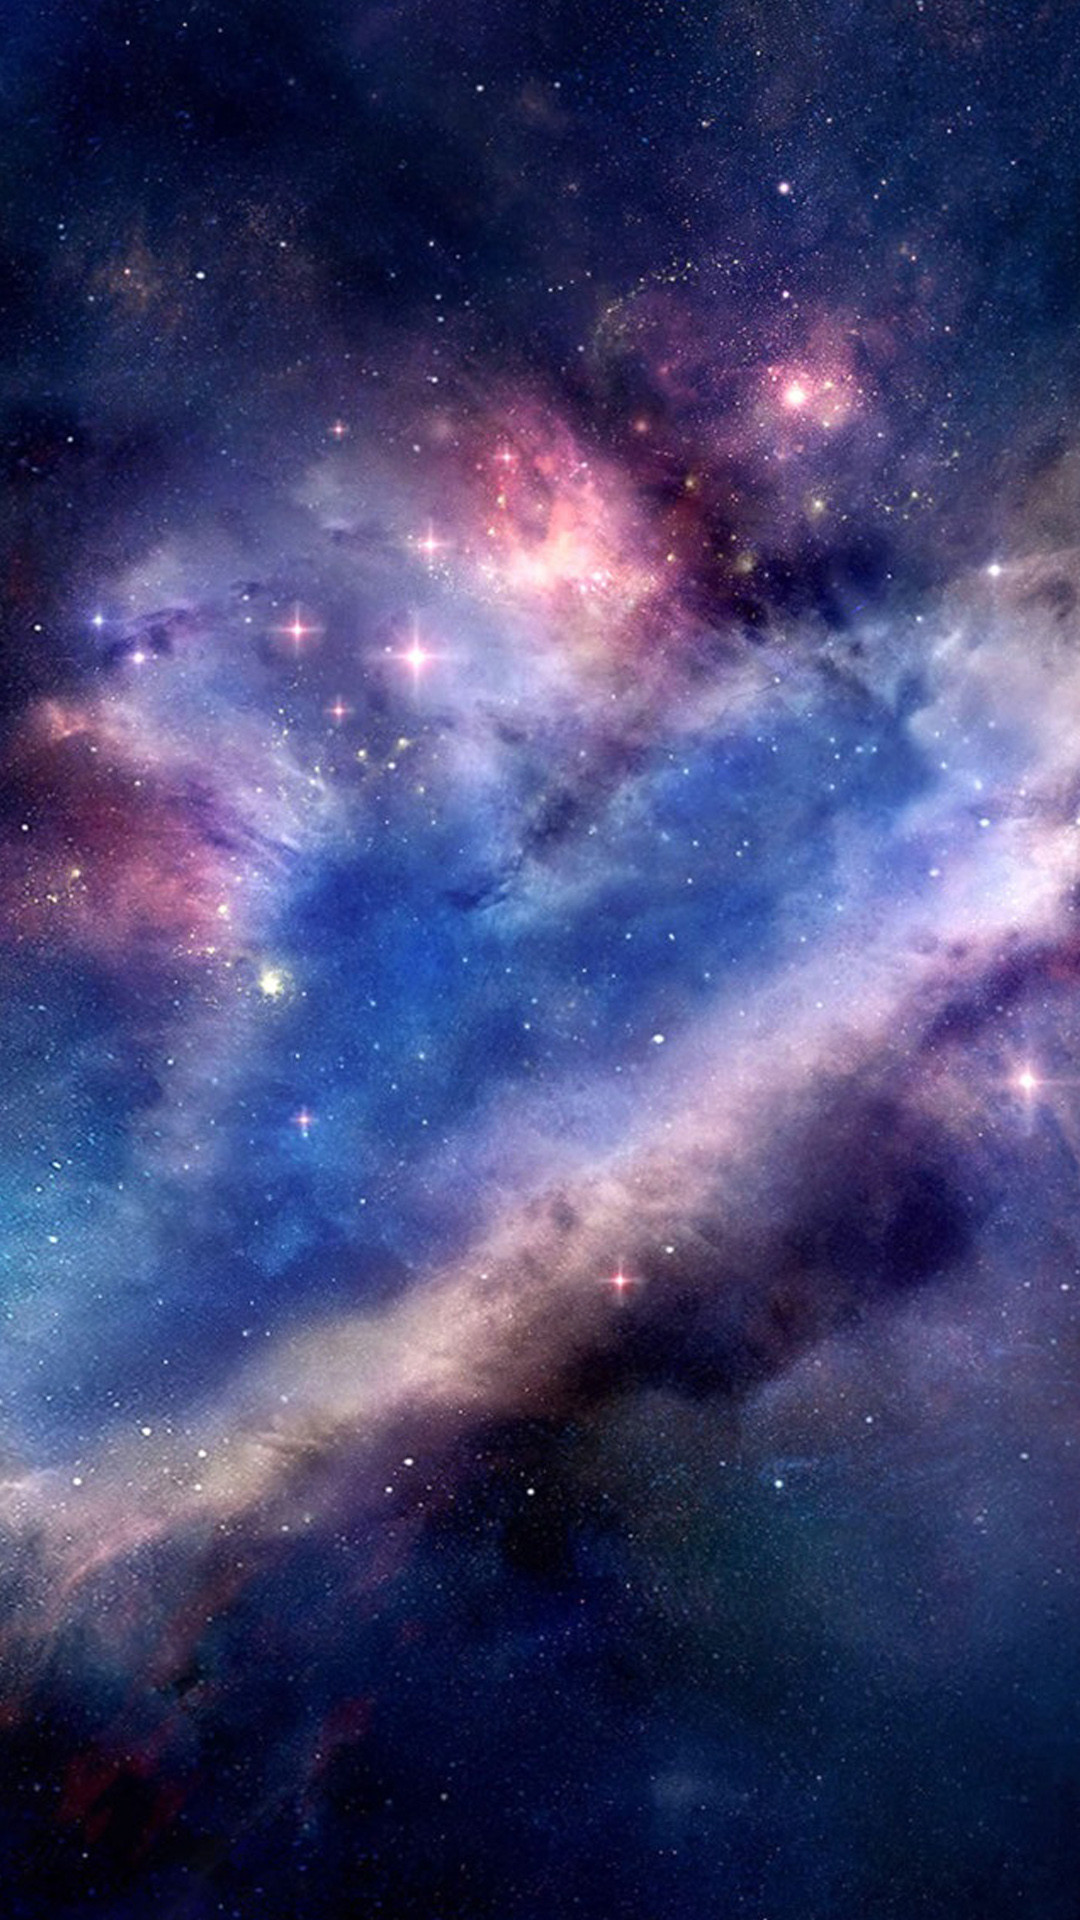 1080x1920 Best Blue galaxy wallpaper ideas on Pinterest Galaxy